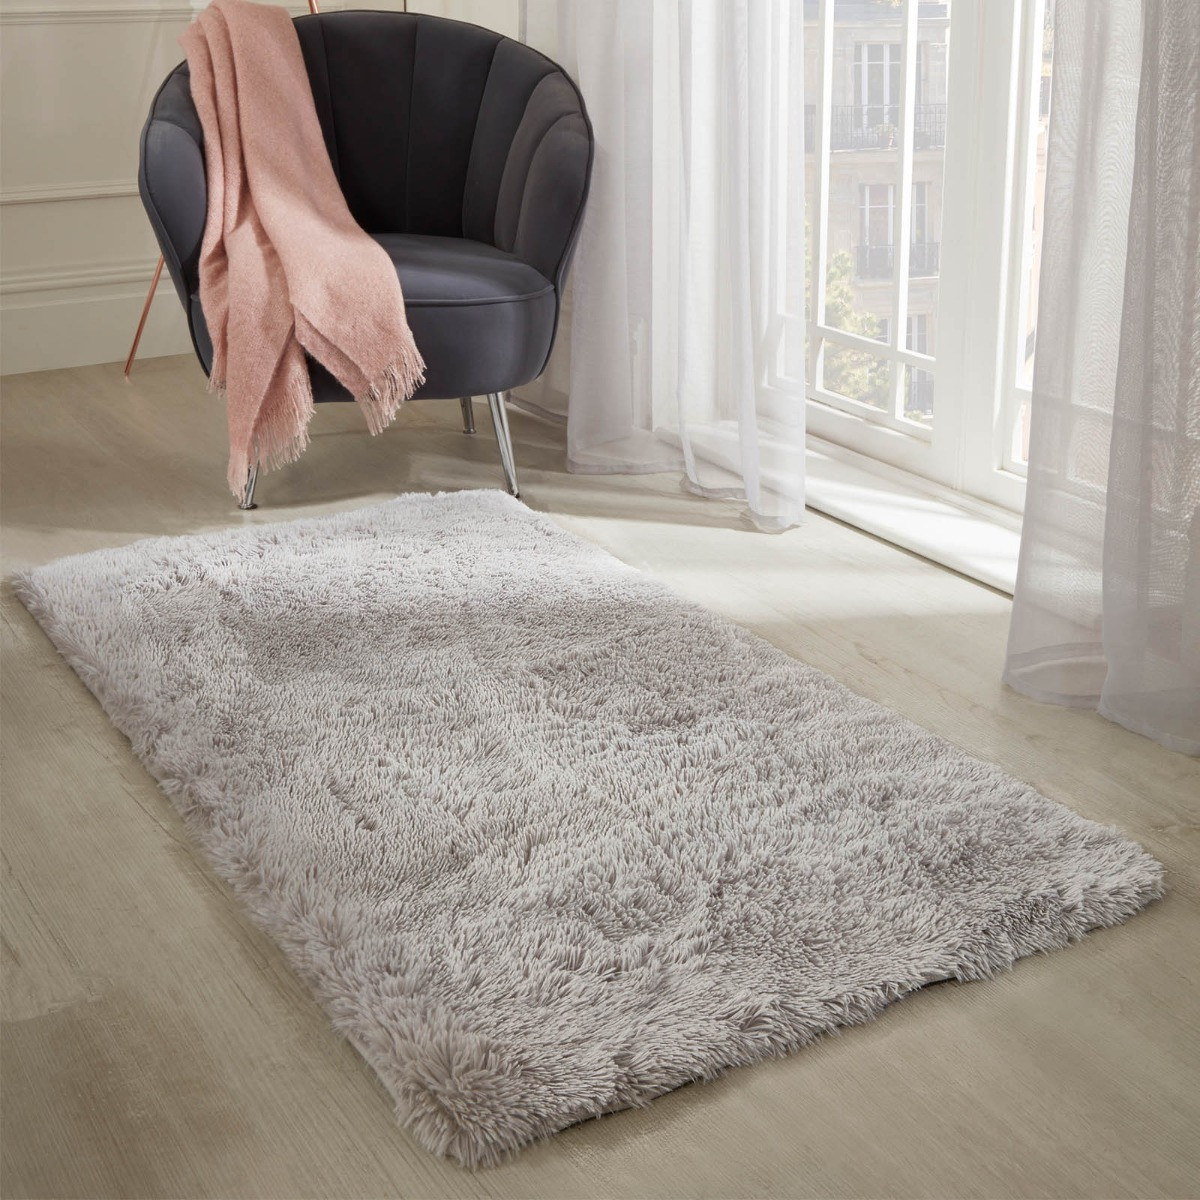 Sienna Soft Fluffy Rug Anti-Slip Plain Shaggy Floor Mat, Silver - 120 x 170cm>